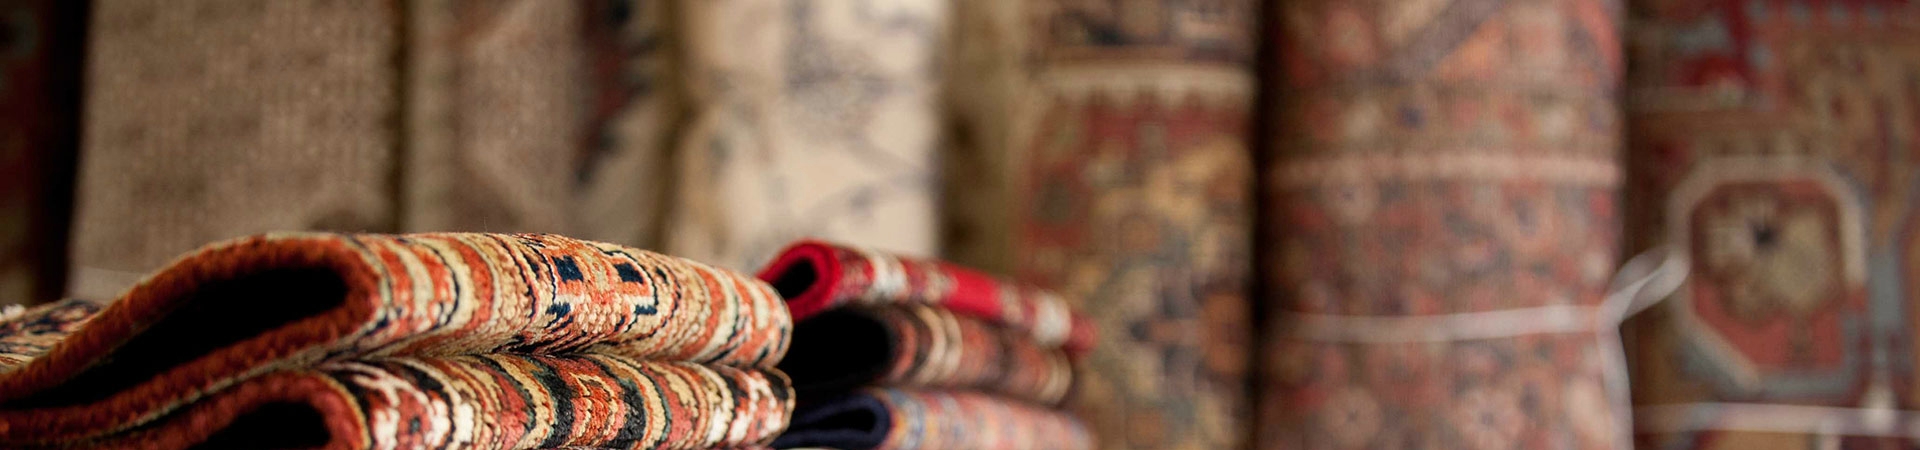 vendita tappeti orientali e classici | tappeti orientali online | tappeti himalayani | genova torino